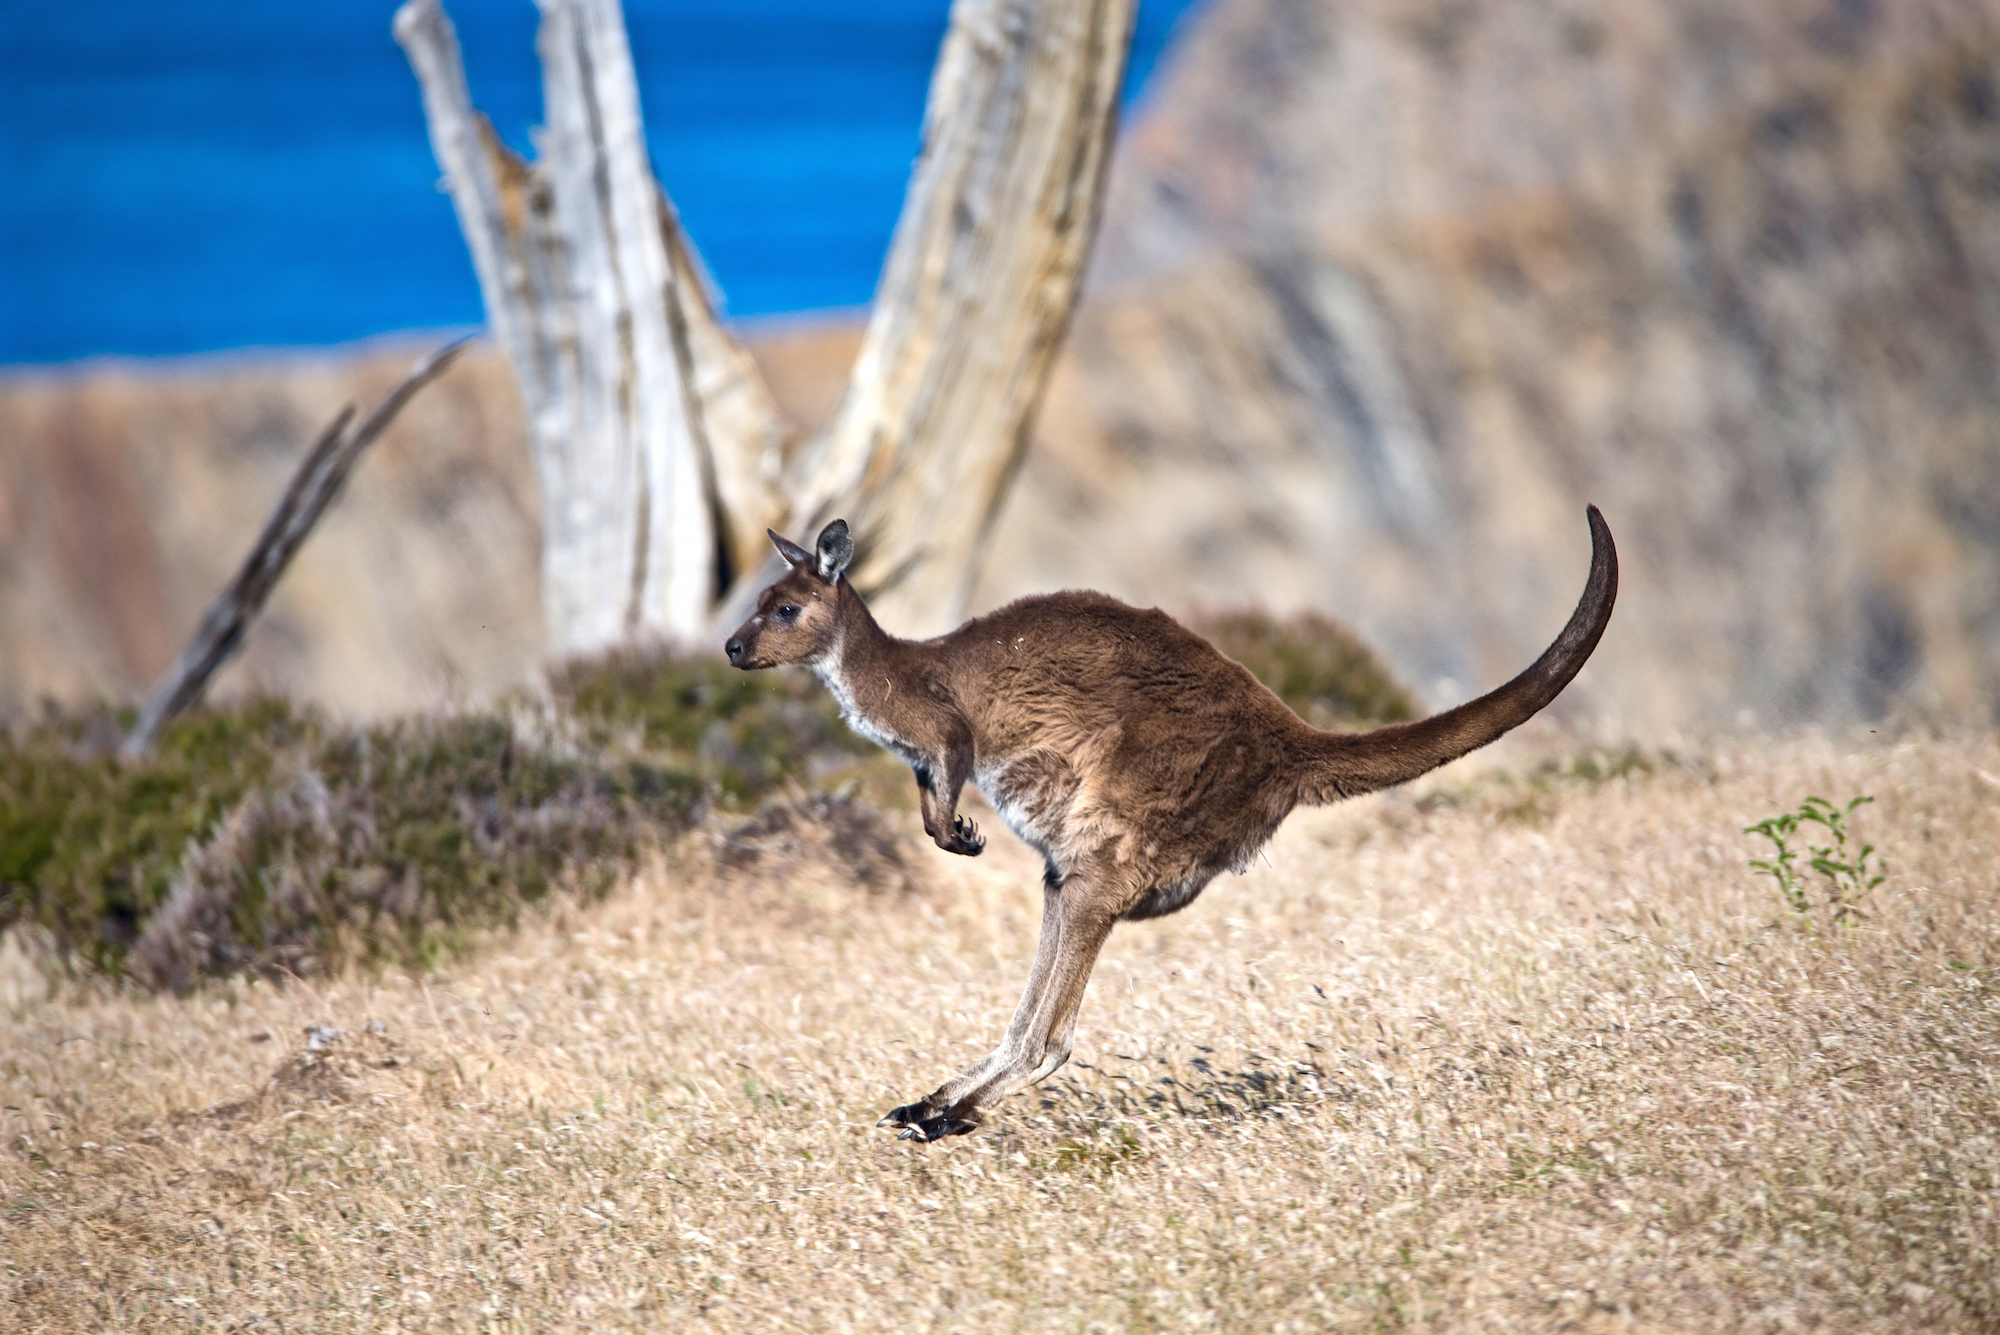 Species Feature: Kangaroo Island Kangaroo | Australian Wildlife Journeys